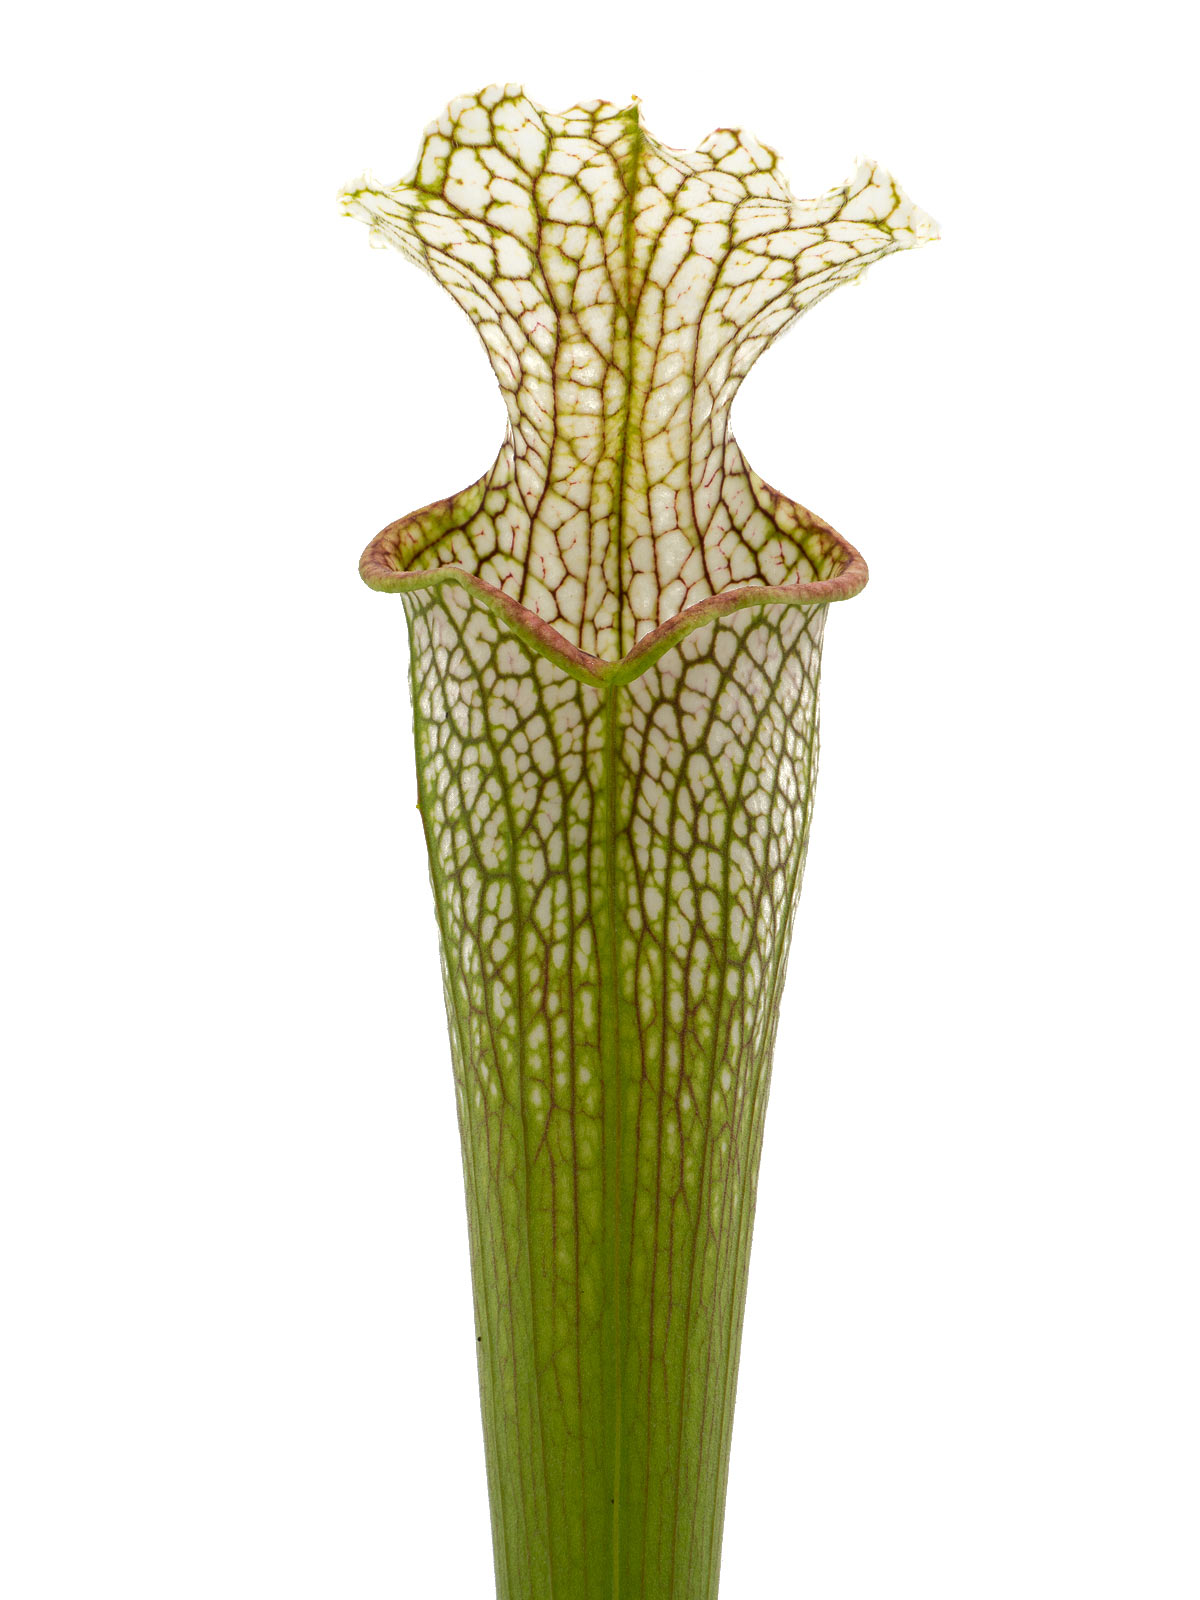 S. leucophylla - MK L101, stocky autumn pitchers